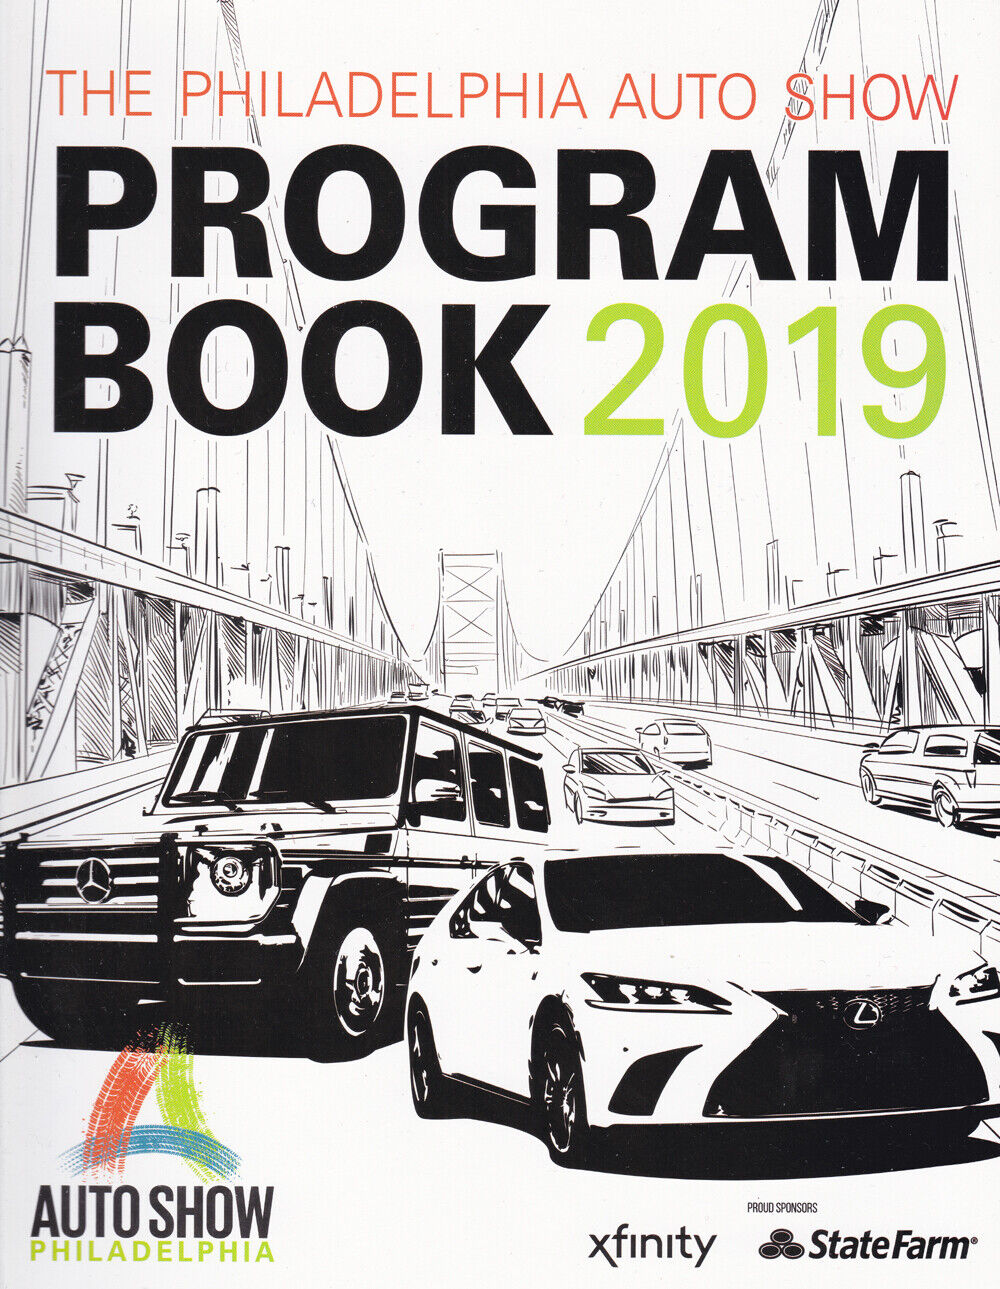 The Philadelphia Auto Show Program Book 2019